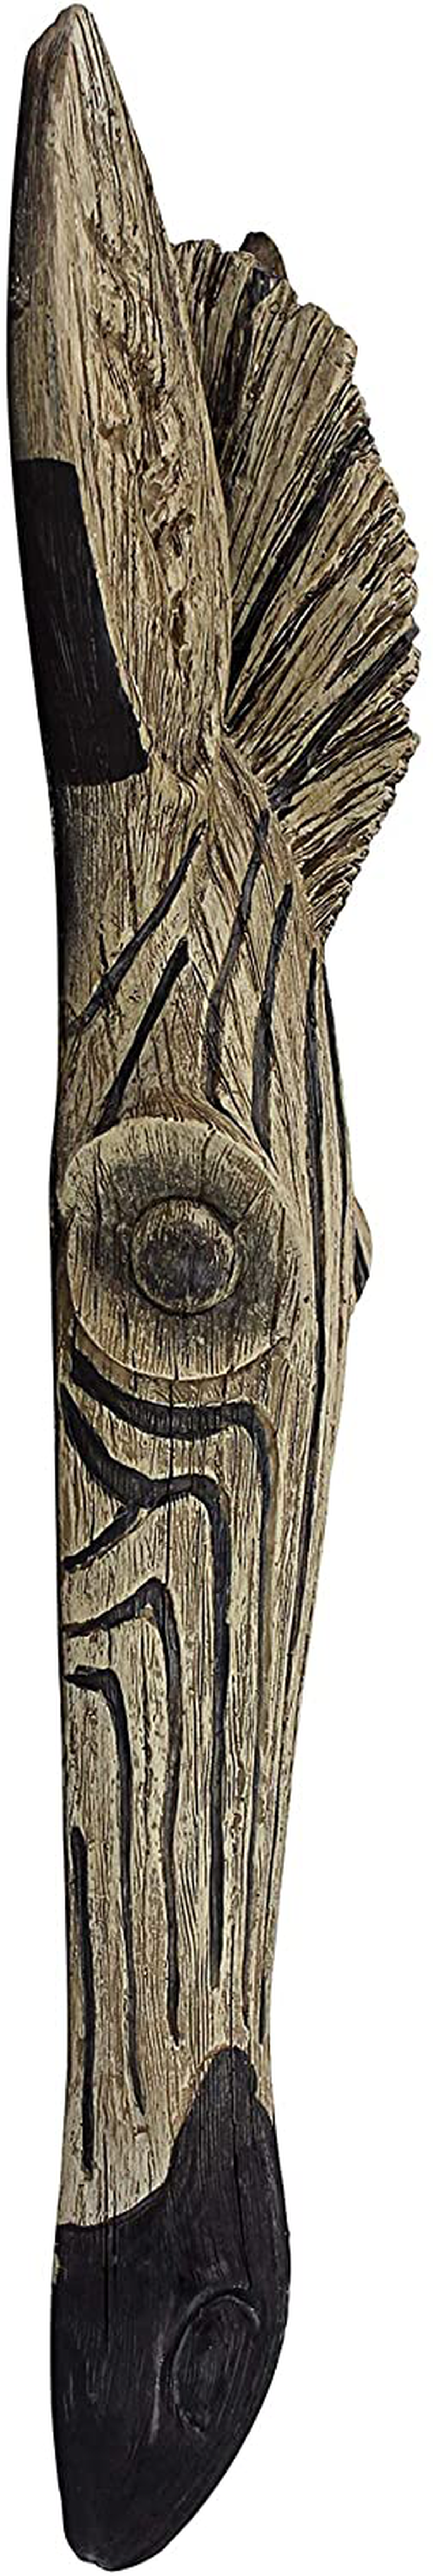 Design Toscano Zebra Animal Mask of the Savannah Wall Decor Sculpture, 16 Inch, Polyresin, Full Color